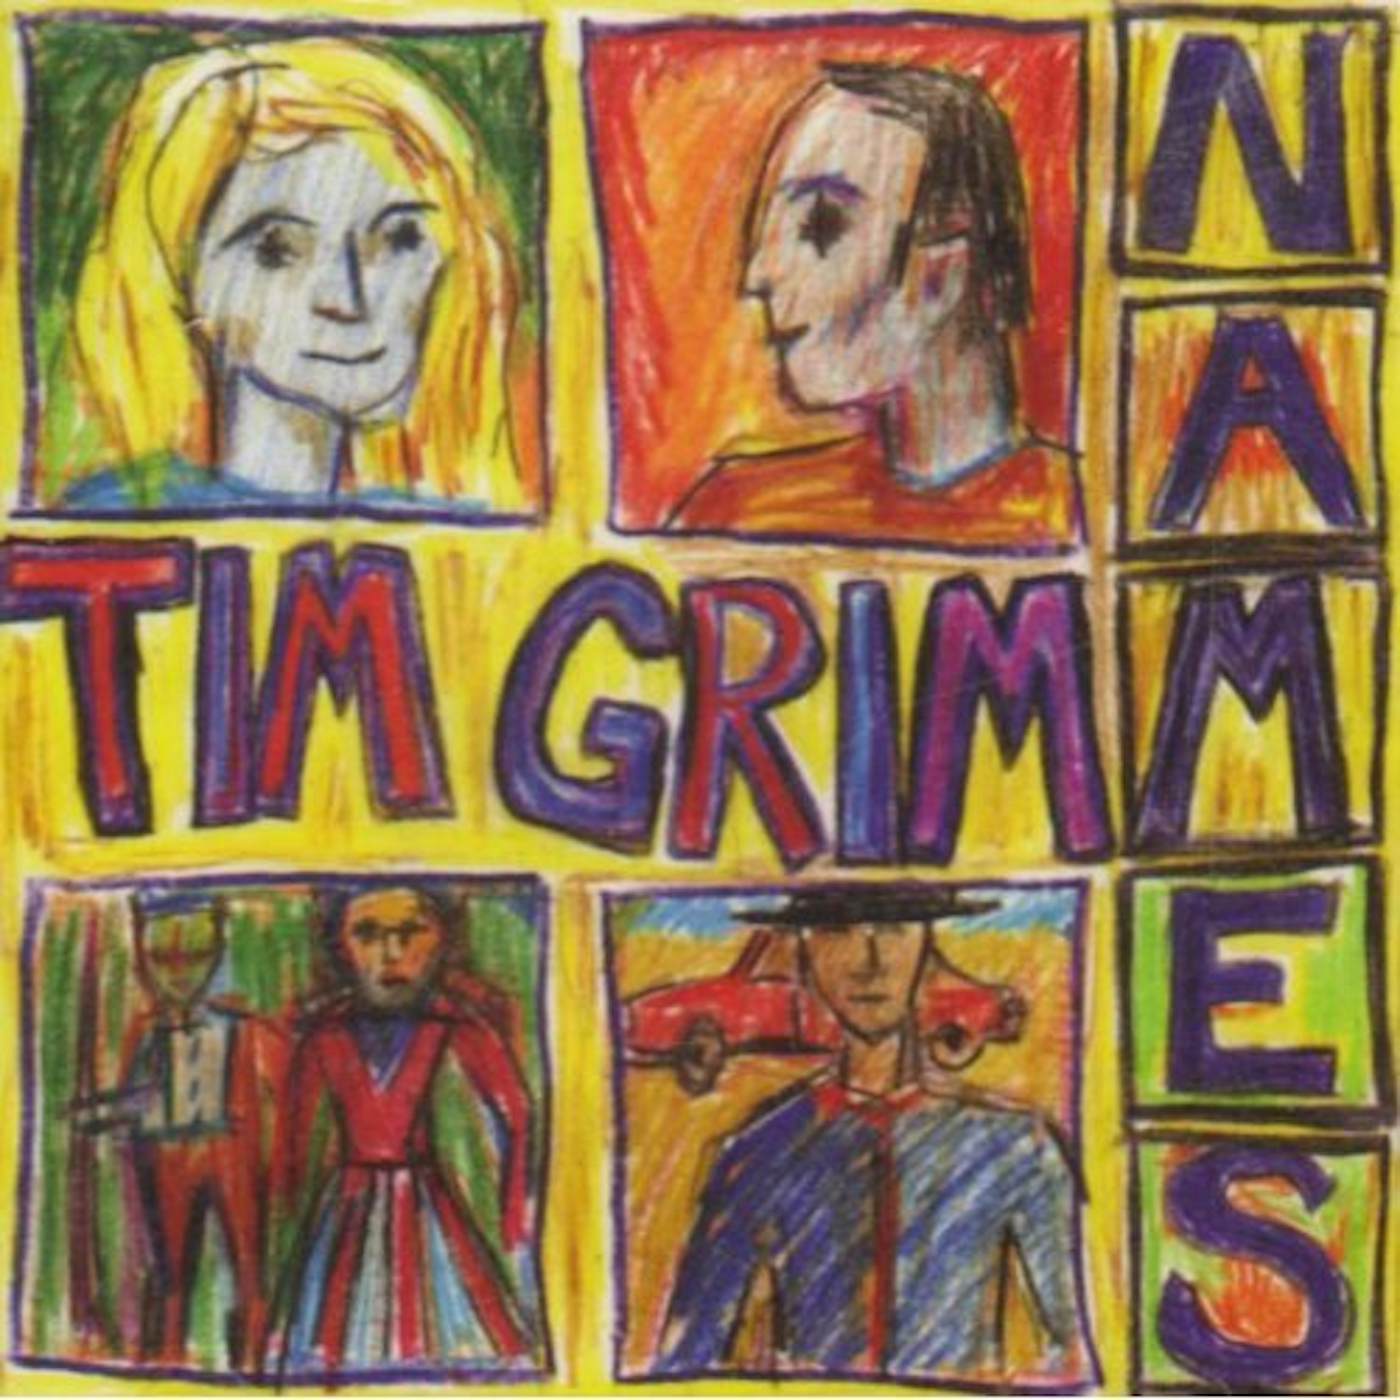 Tim Grimm NAMES CD